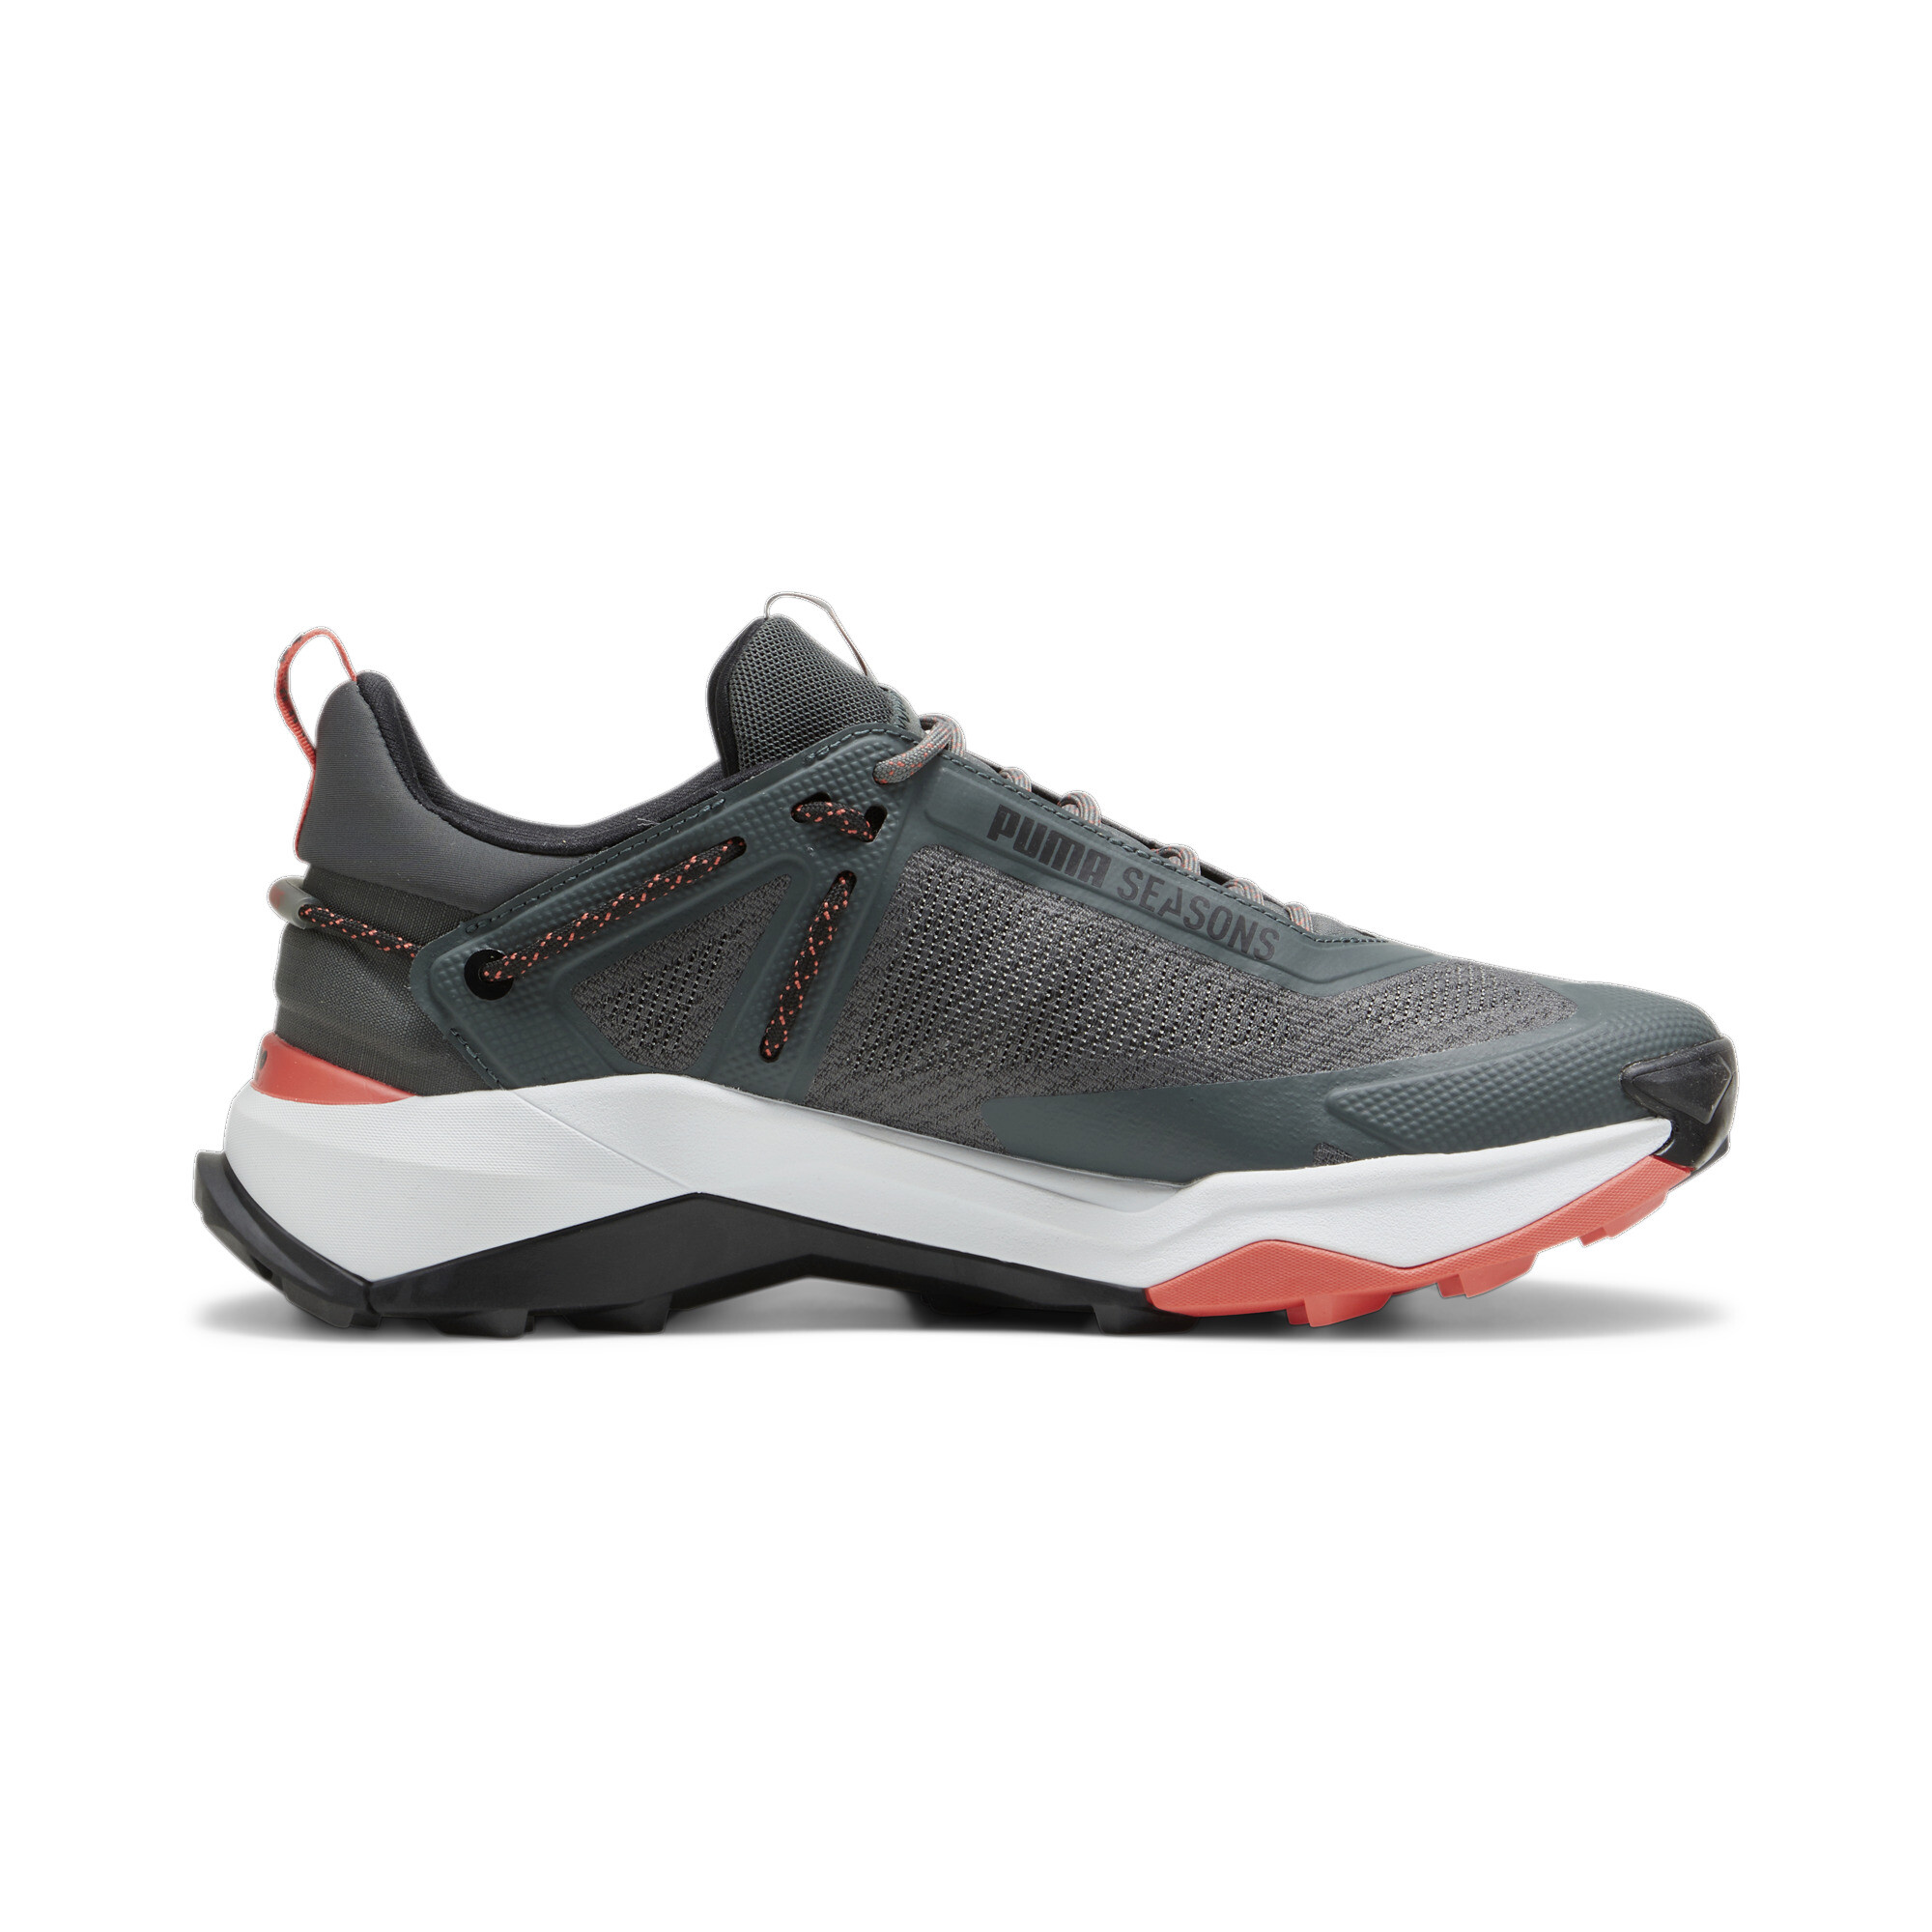 Men's PUMA Explore NITROâ¢ Hiking Shoes In Gray, Size EU 43